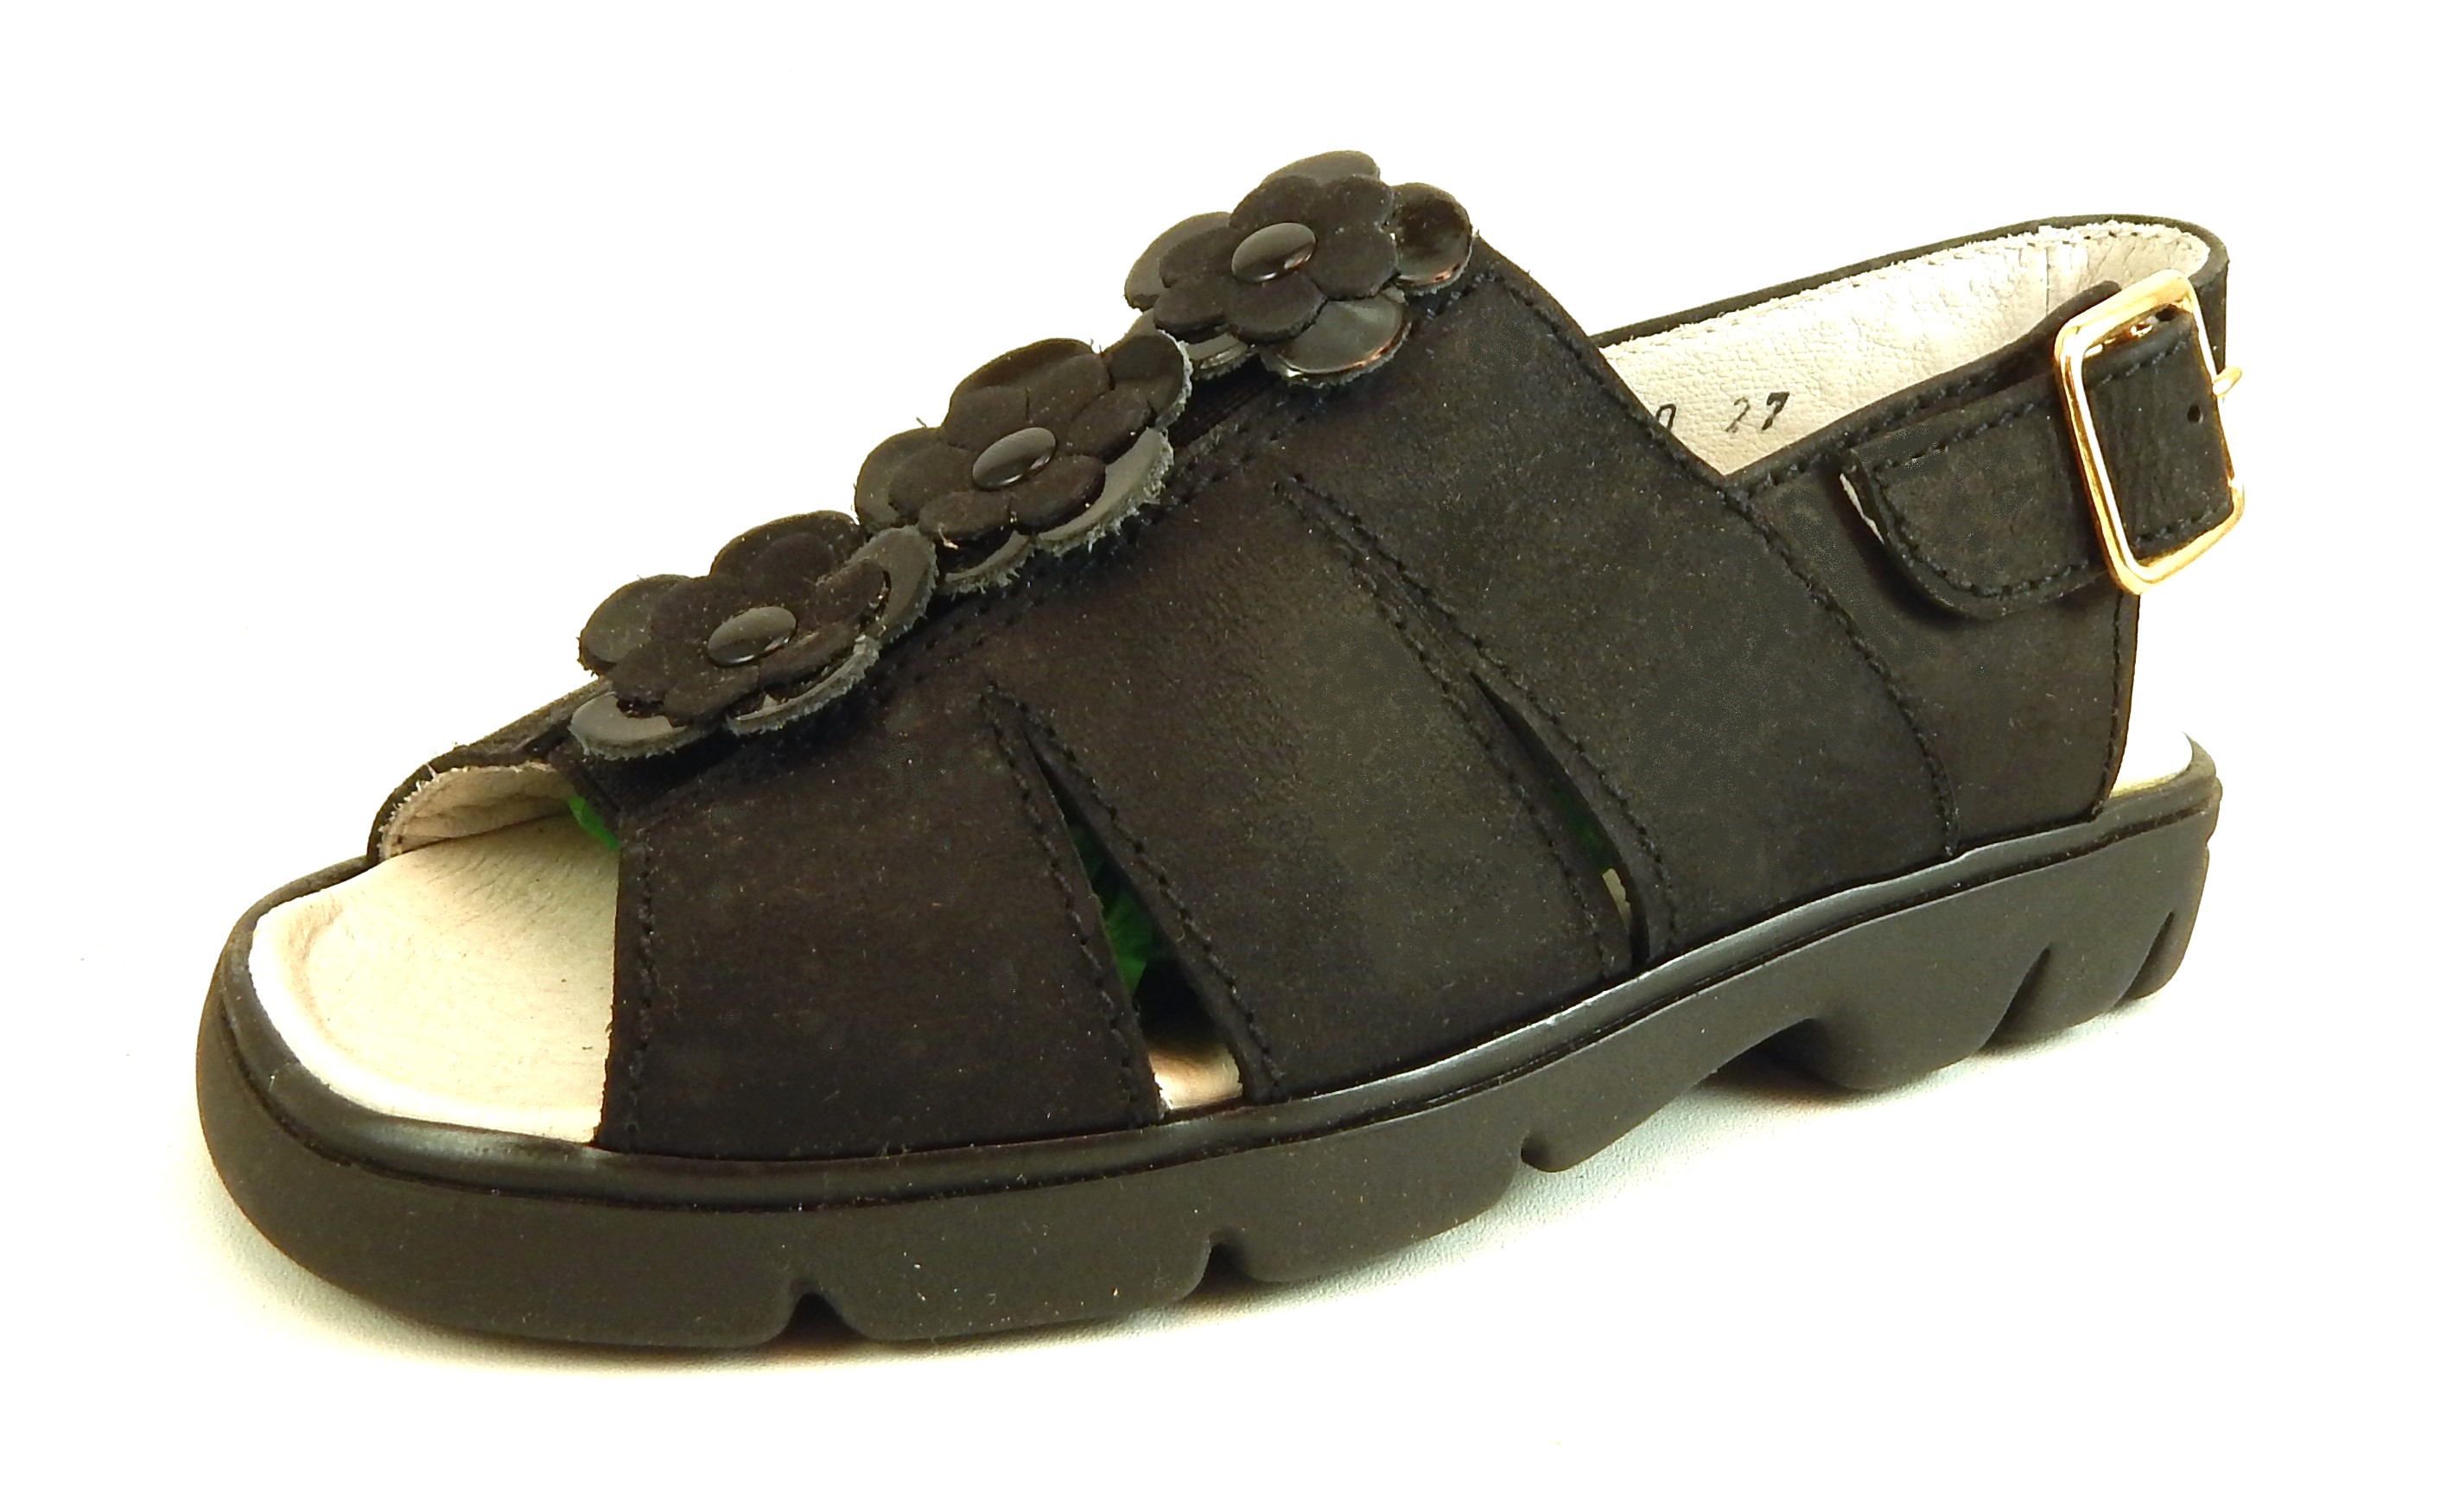 B-470 - Black Nubuck Sandals